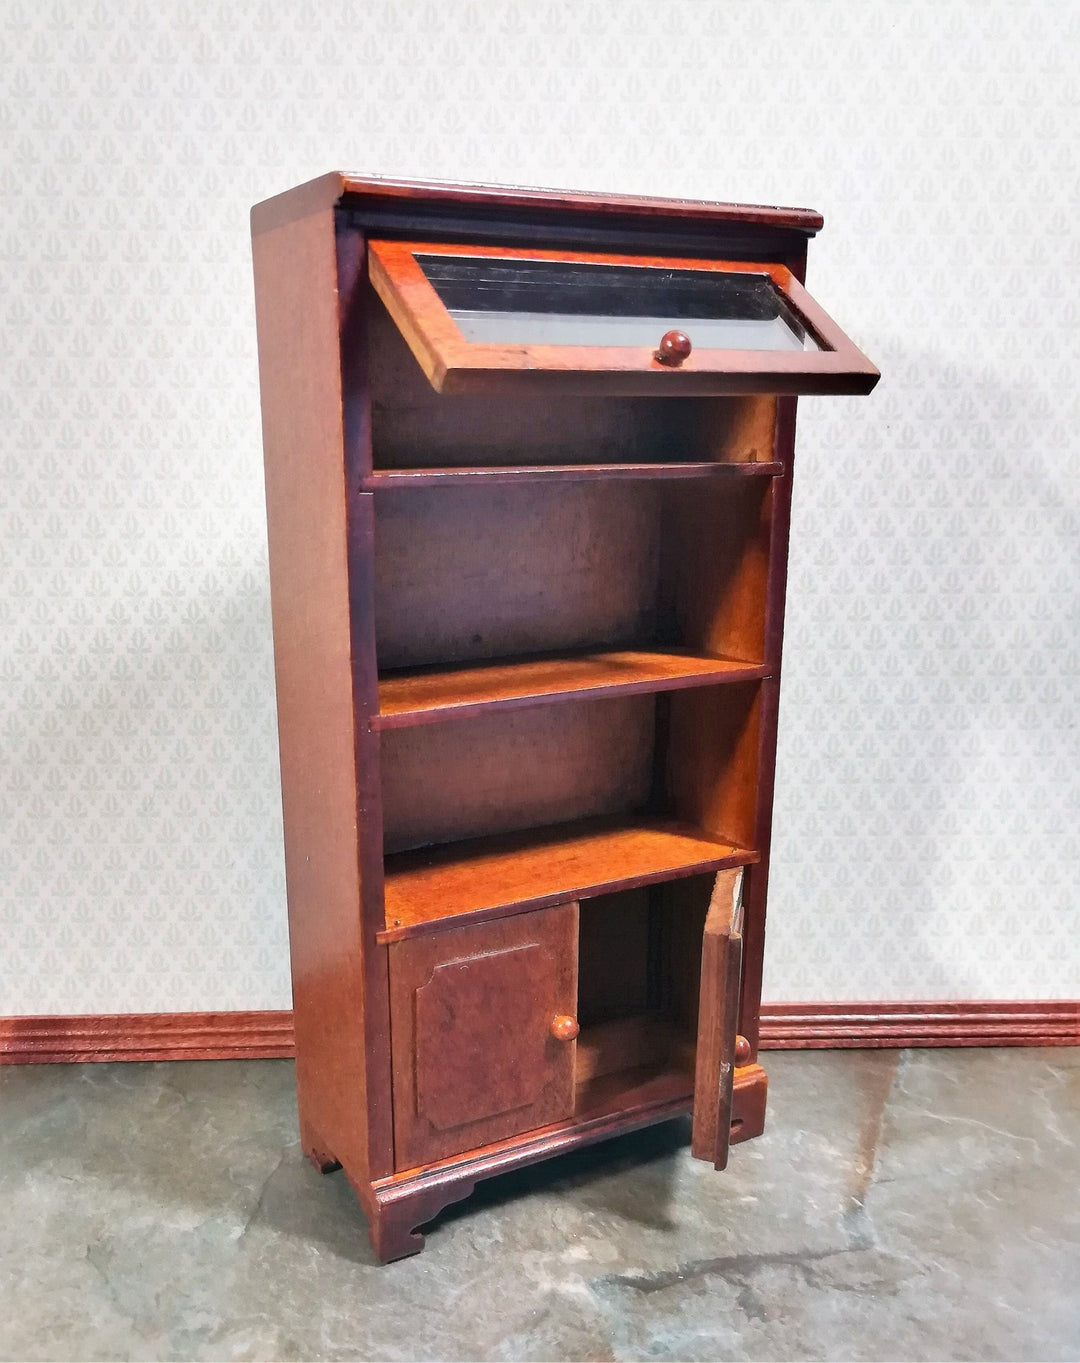 Dollhouse Bookcase Lift Up Door Walnut Finish 1:12 Scale Miniature Furniture Bookshelf - Miniature Crush